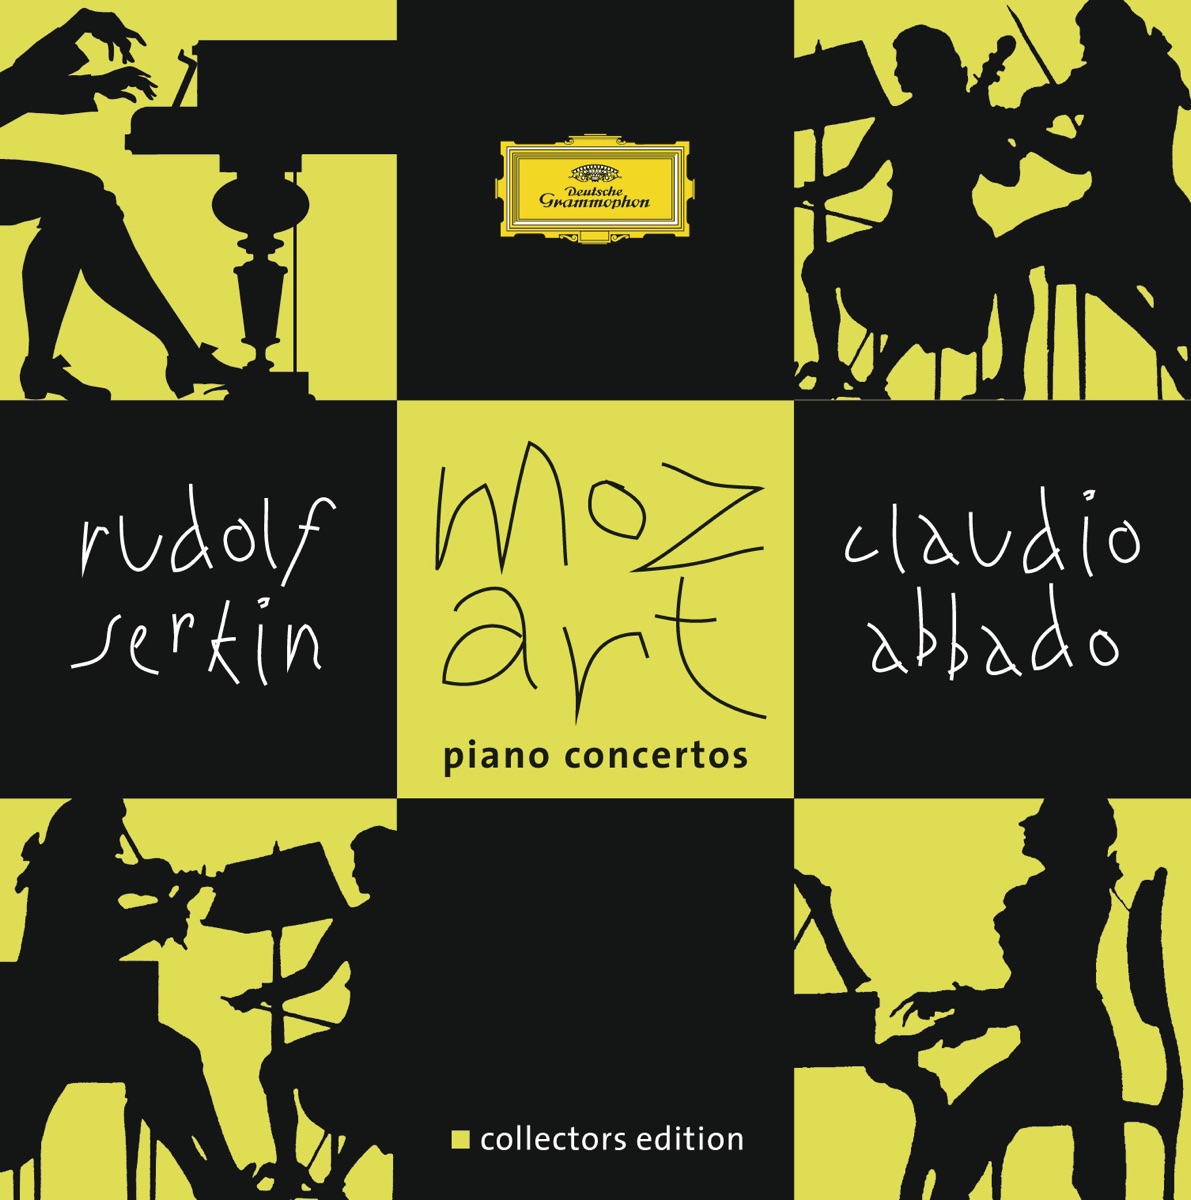 Mozart: Piano Concertos by Rudolf Serkin on Apple Music